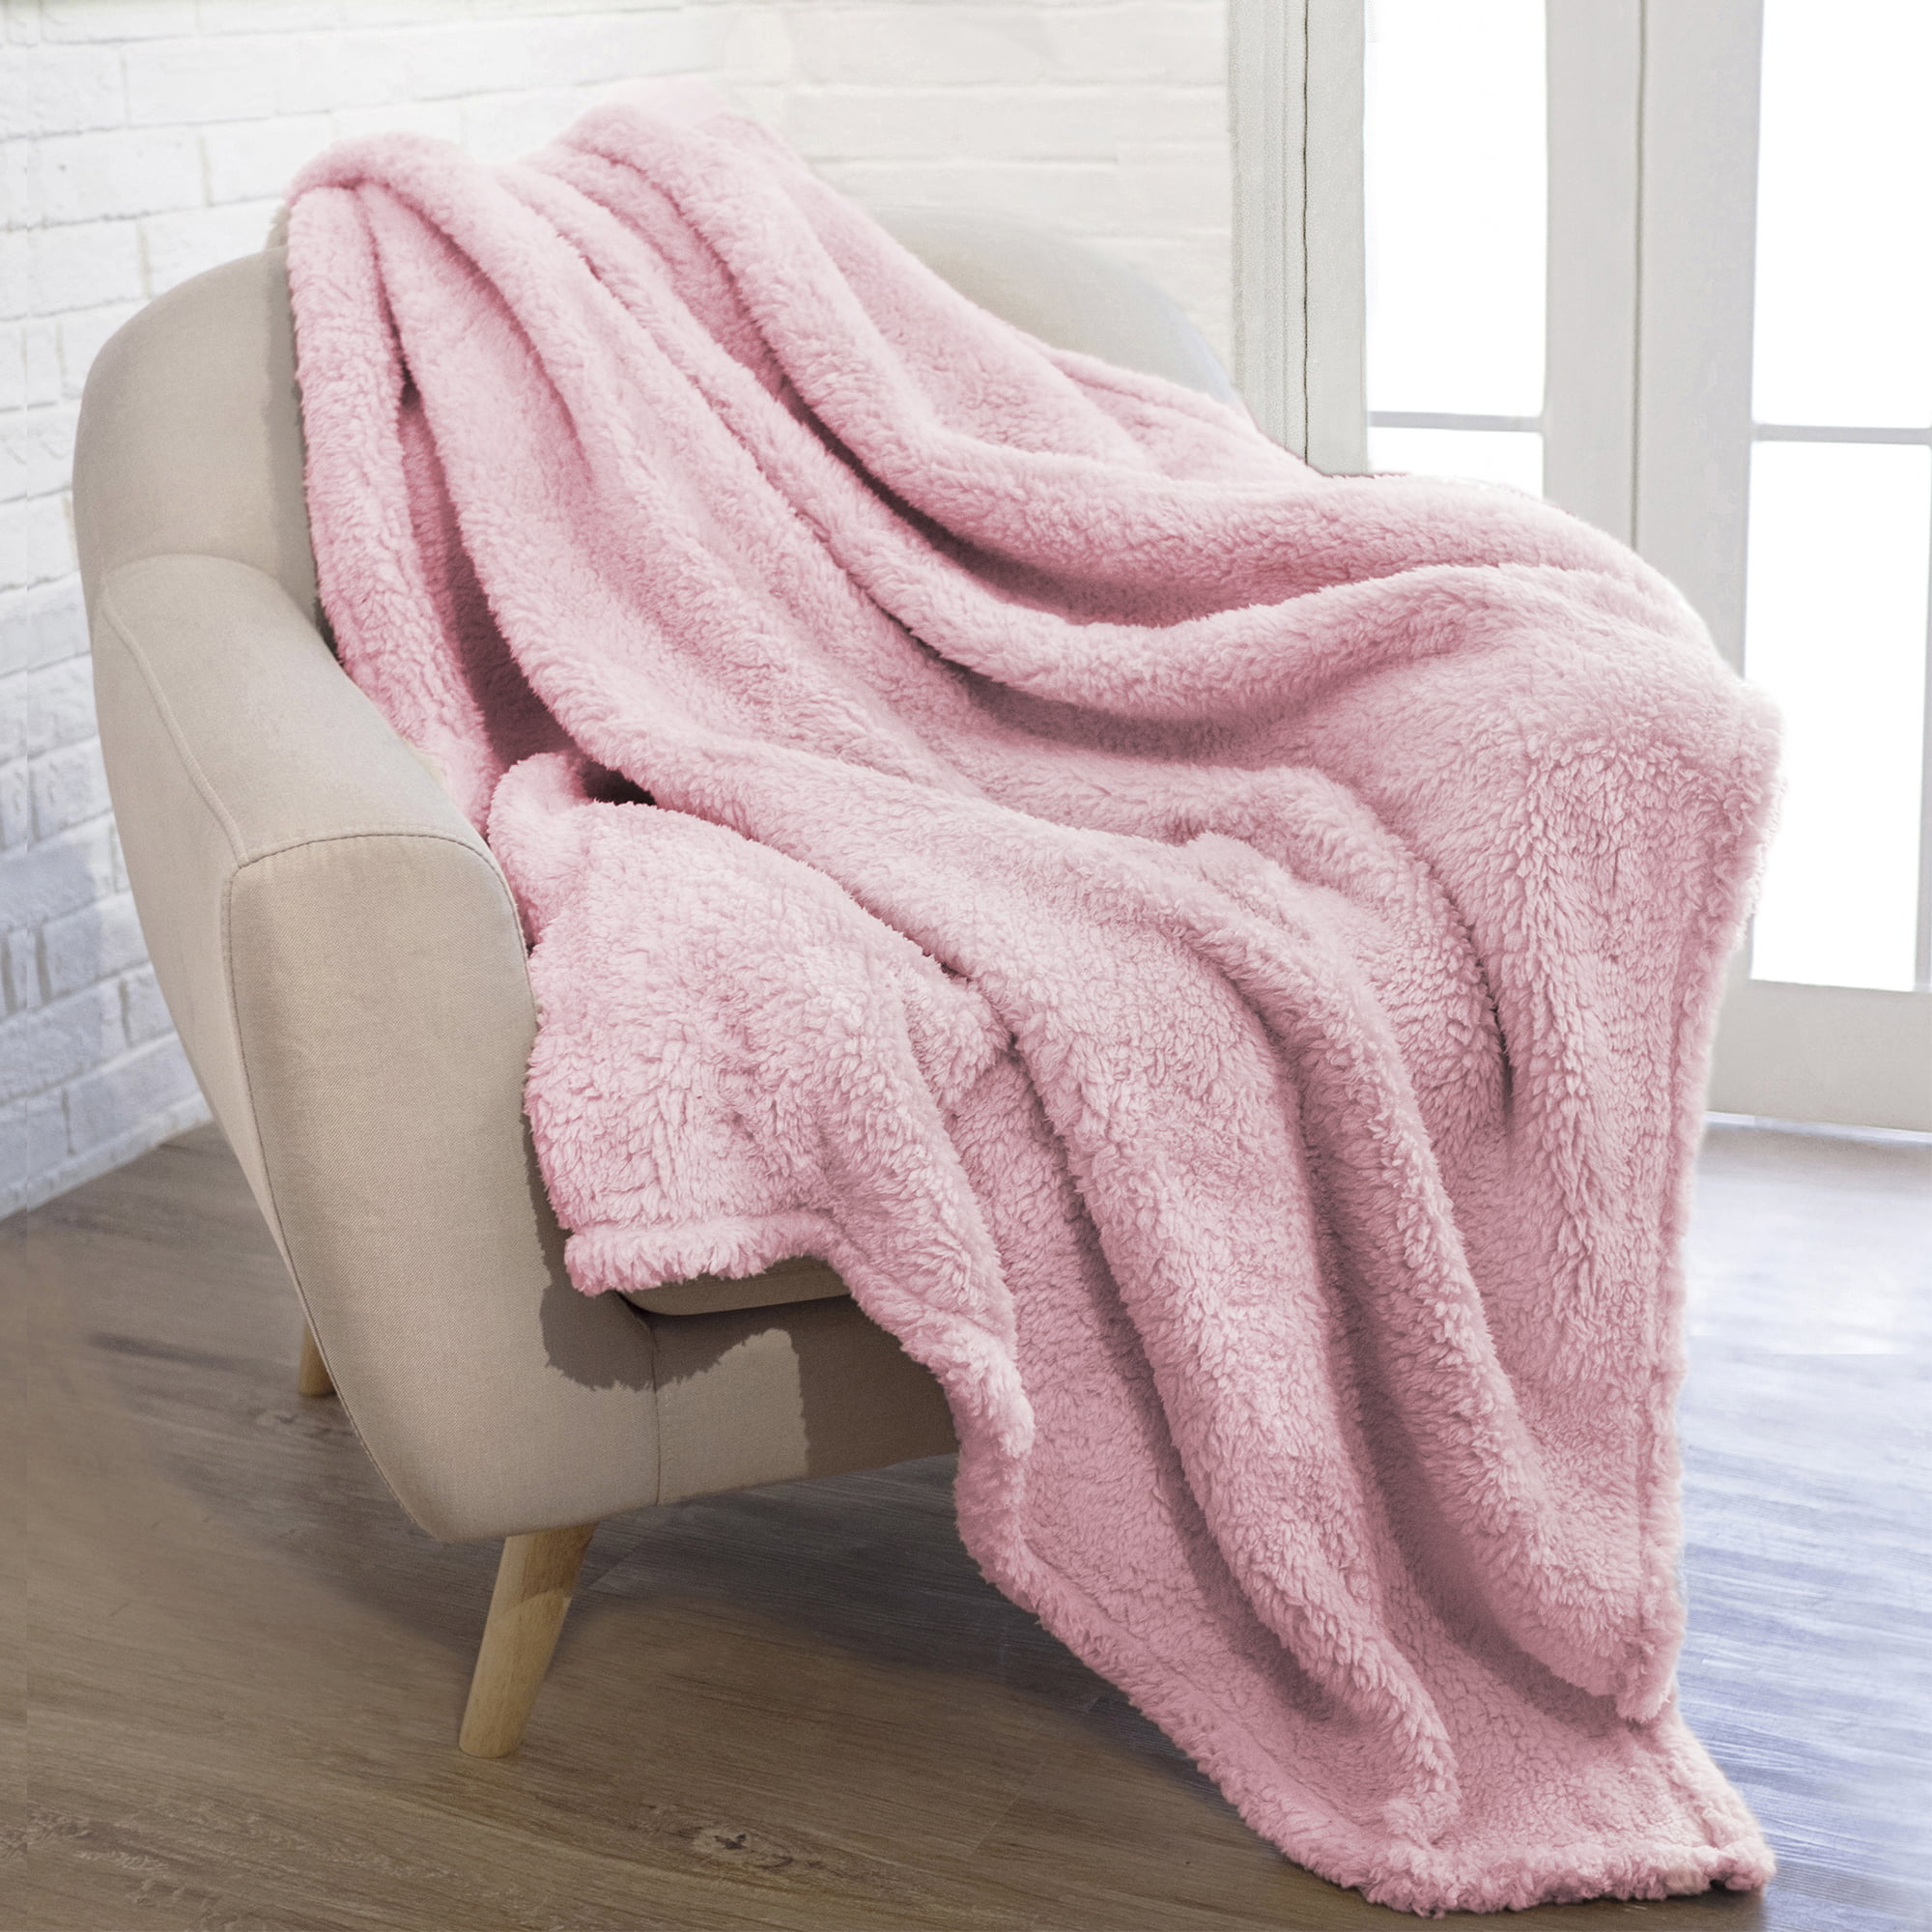 ROYAL BLUE Soft Fuzzy Warm Cozy Throw Blanket Flufy Sherpa Fleece Sofa Bed 50X60 